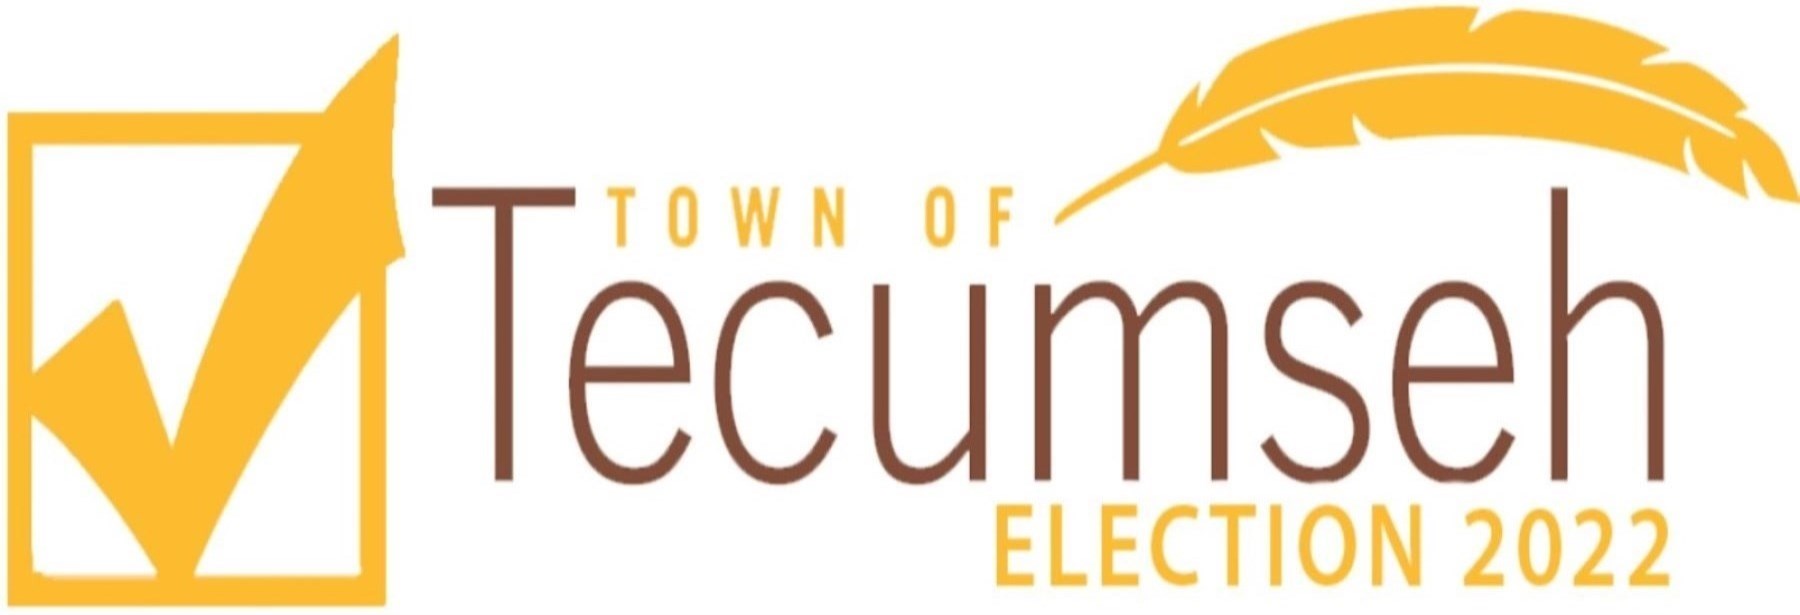 2022 Town of Tecumseh Election Logo